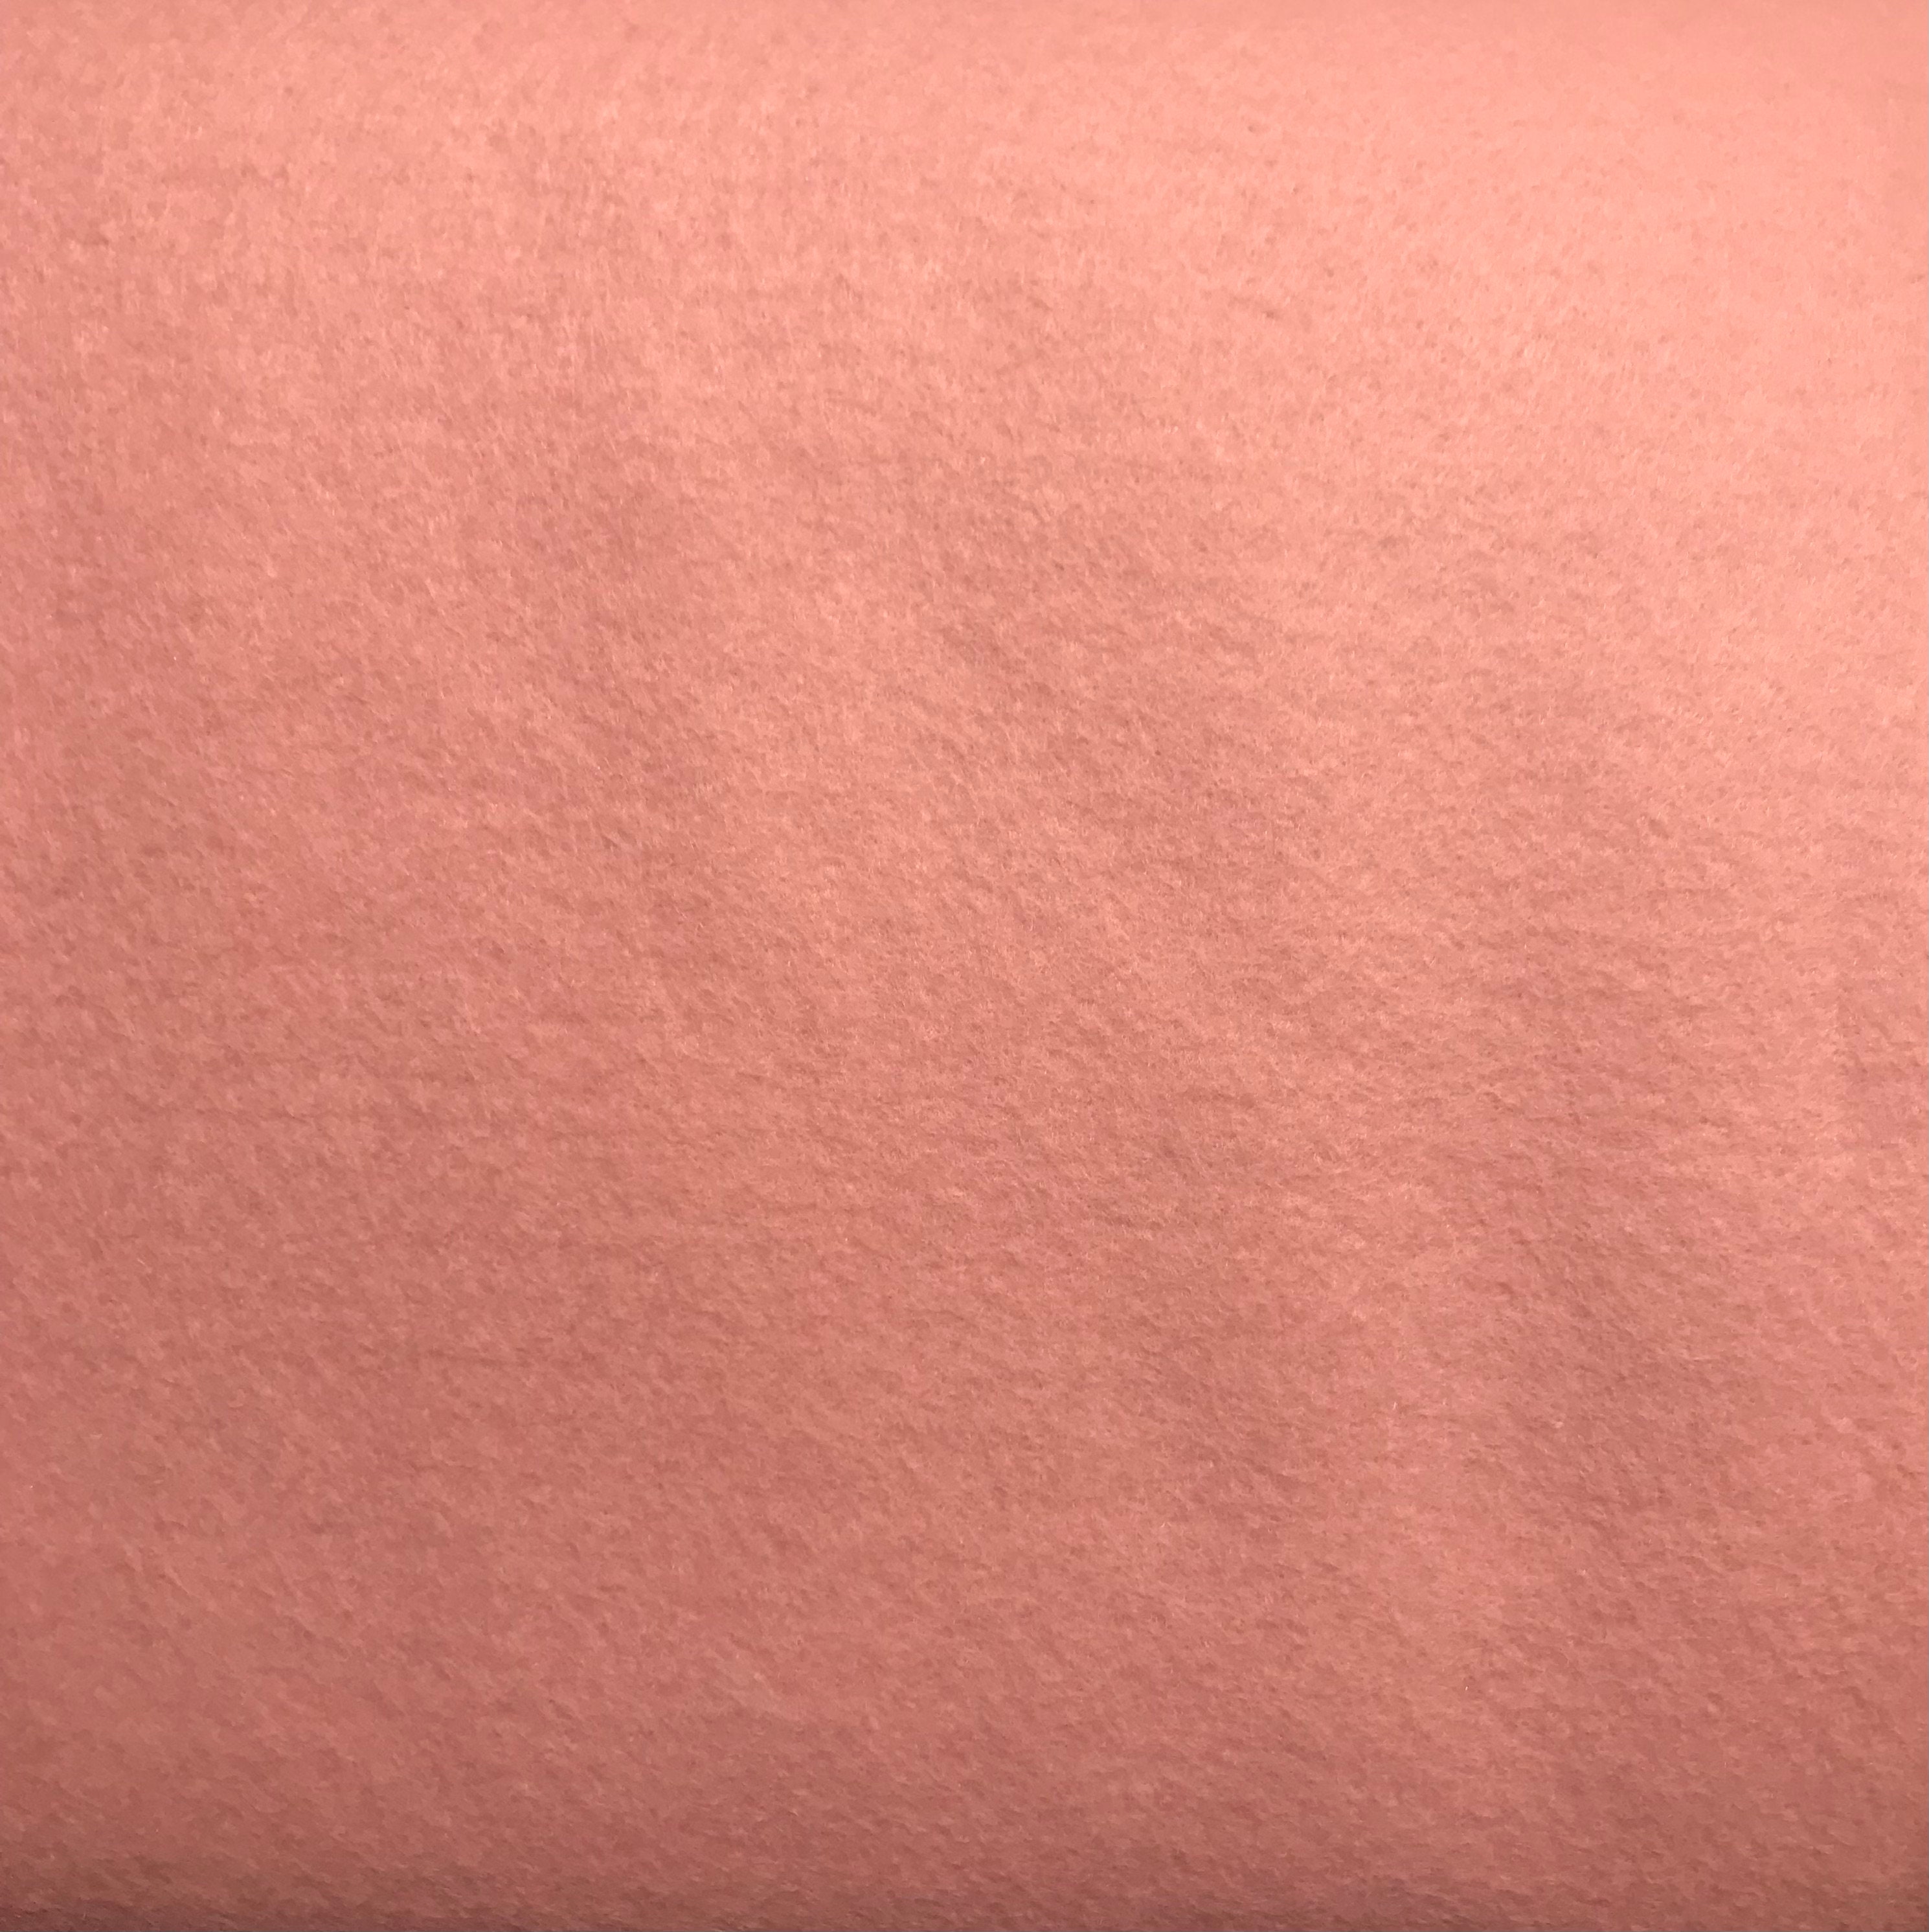 Sandstone Light Brown - Large Brown Wool Felt Premium Sheet - 20% Wool  Blend - DIY, Sewing, Crafting, Felting - National Nonwovens - 1 36 in x 36  in